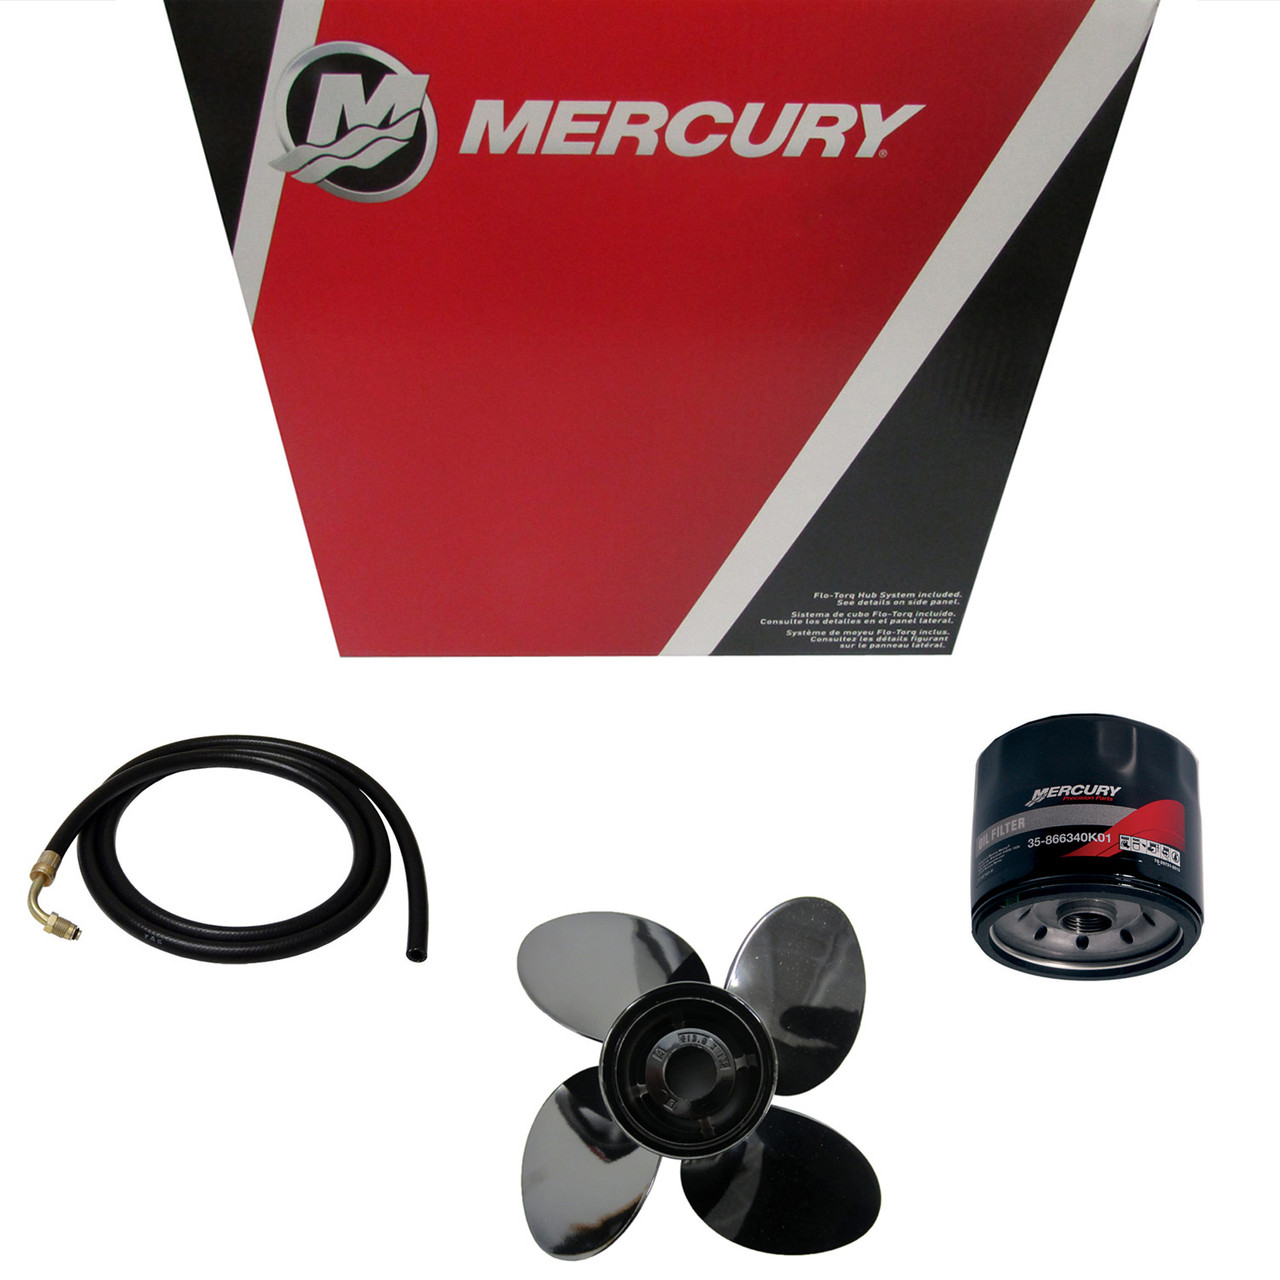 Mercury Marine / Mercruiser New OEM Brv3 14.0X24 Rh R, 48-8M0123407